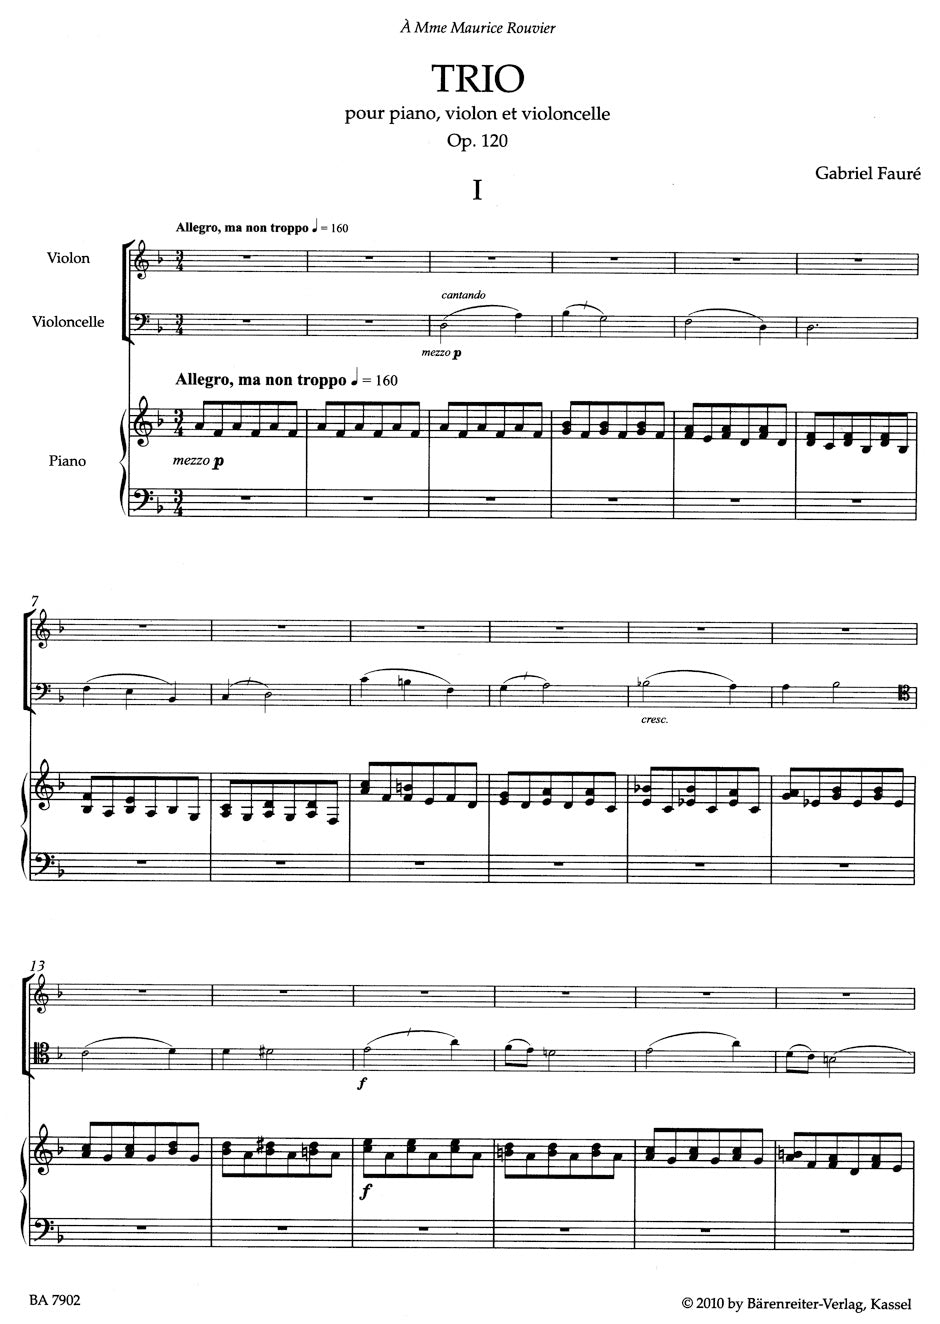 Faure Trio for Piano, Violin and Violoncello op. 120 N 194